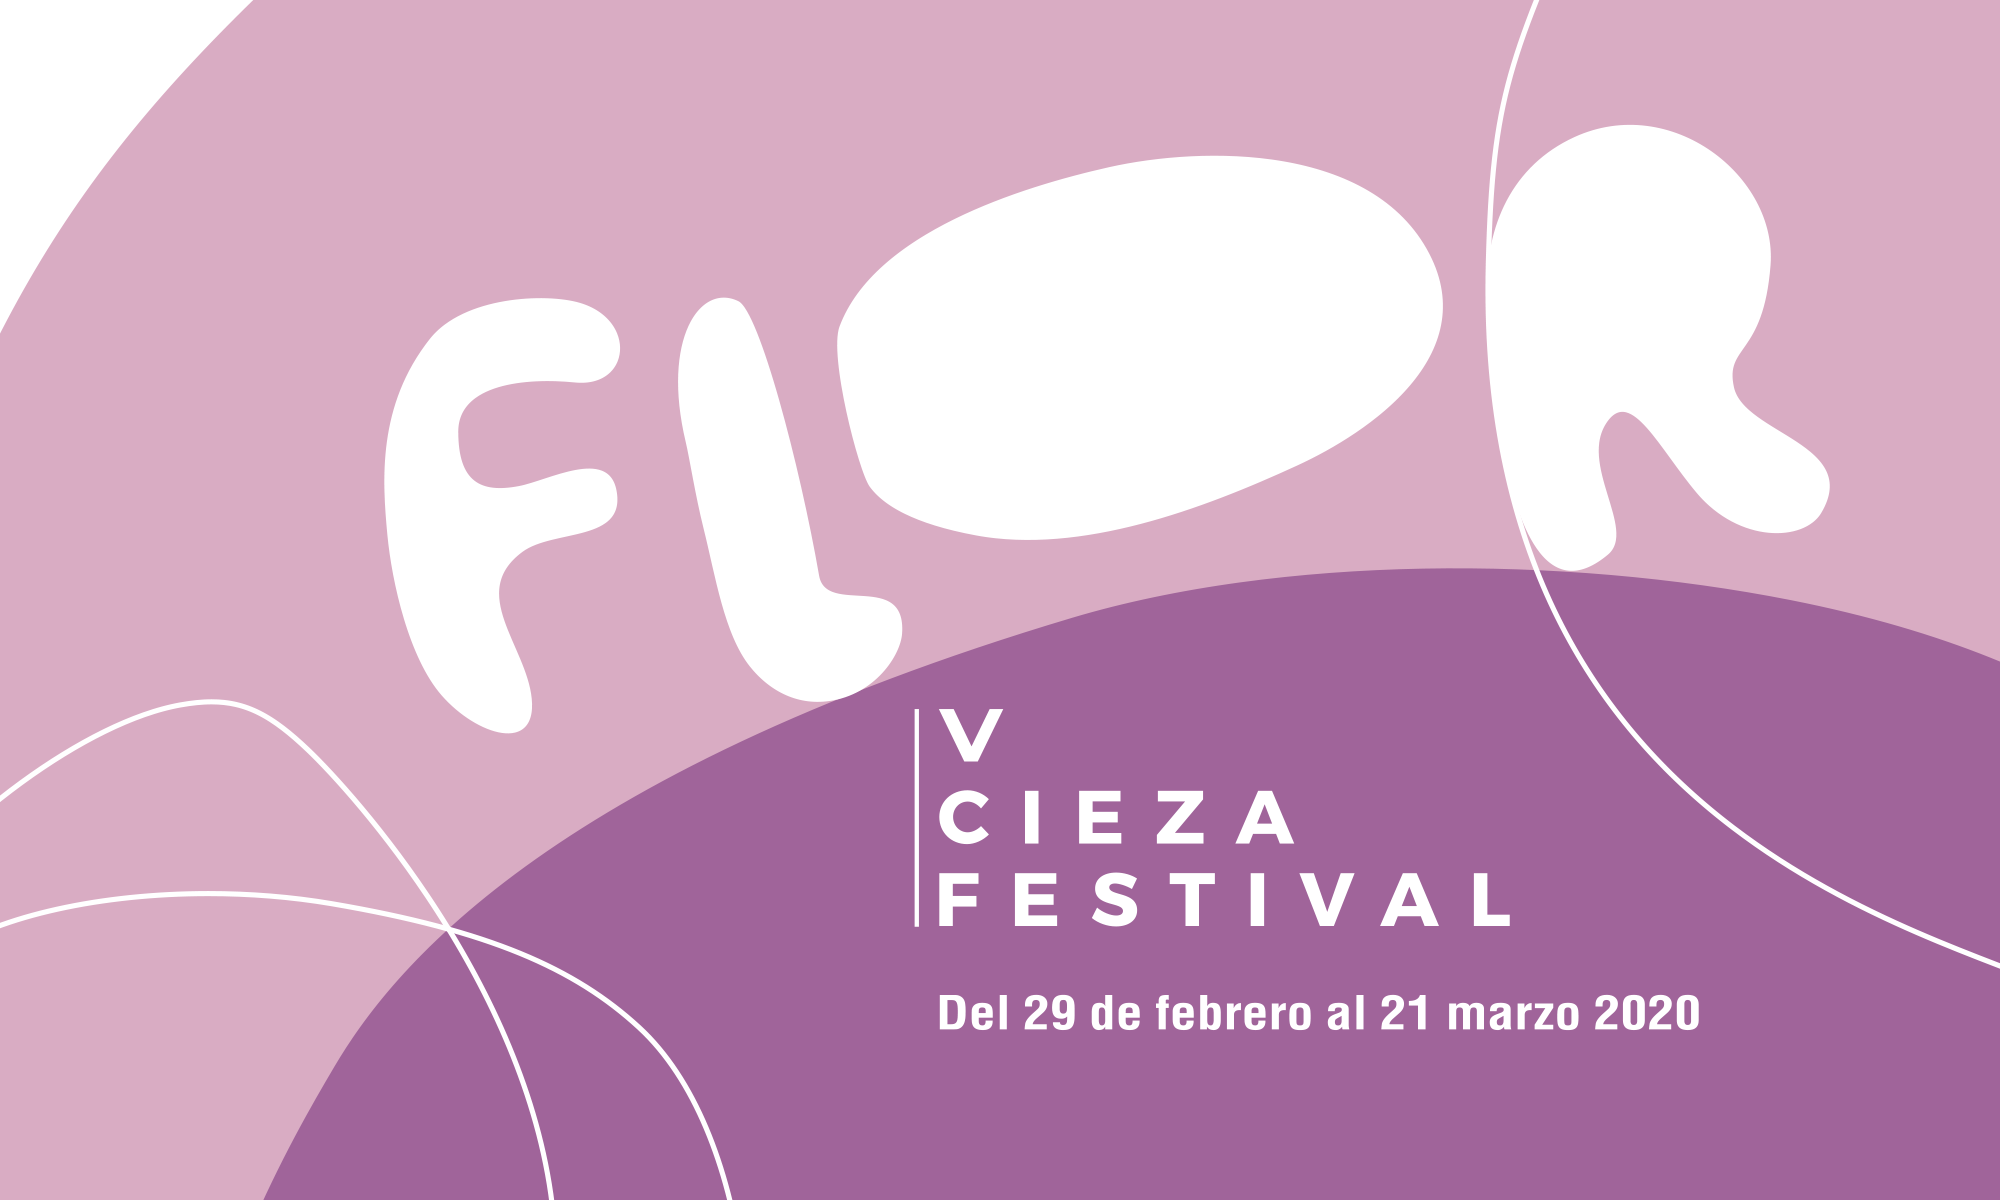 Flor Cieza Festival